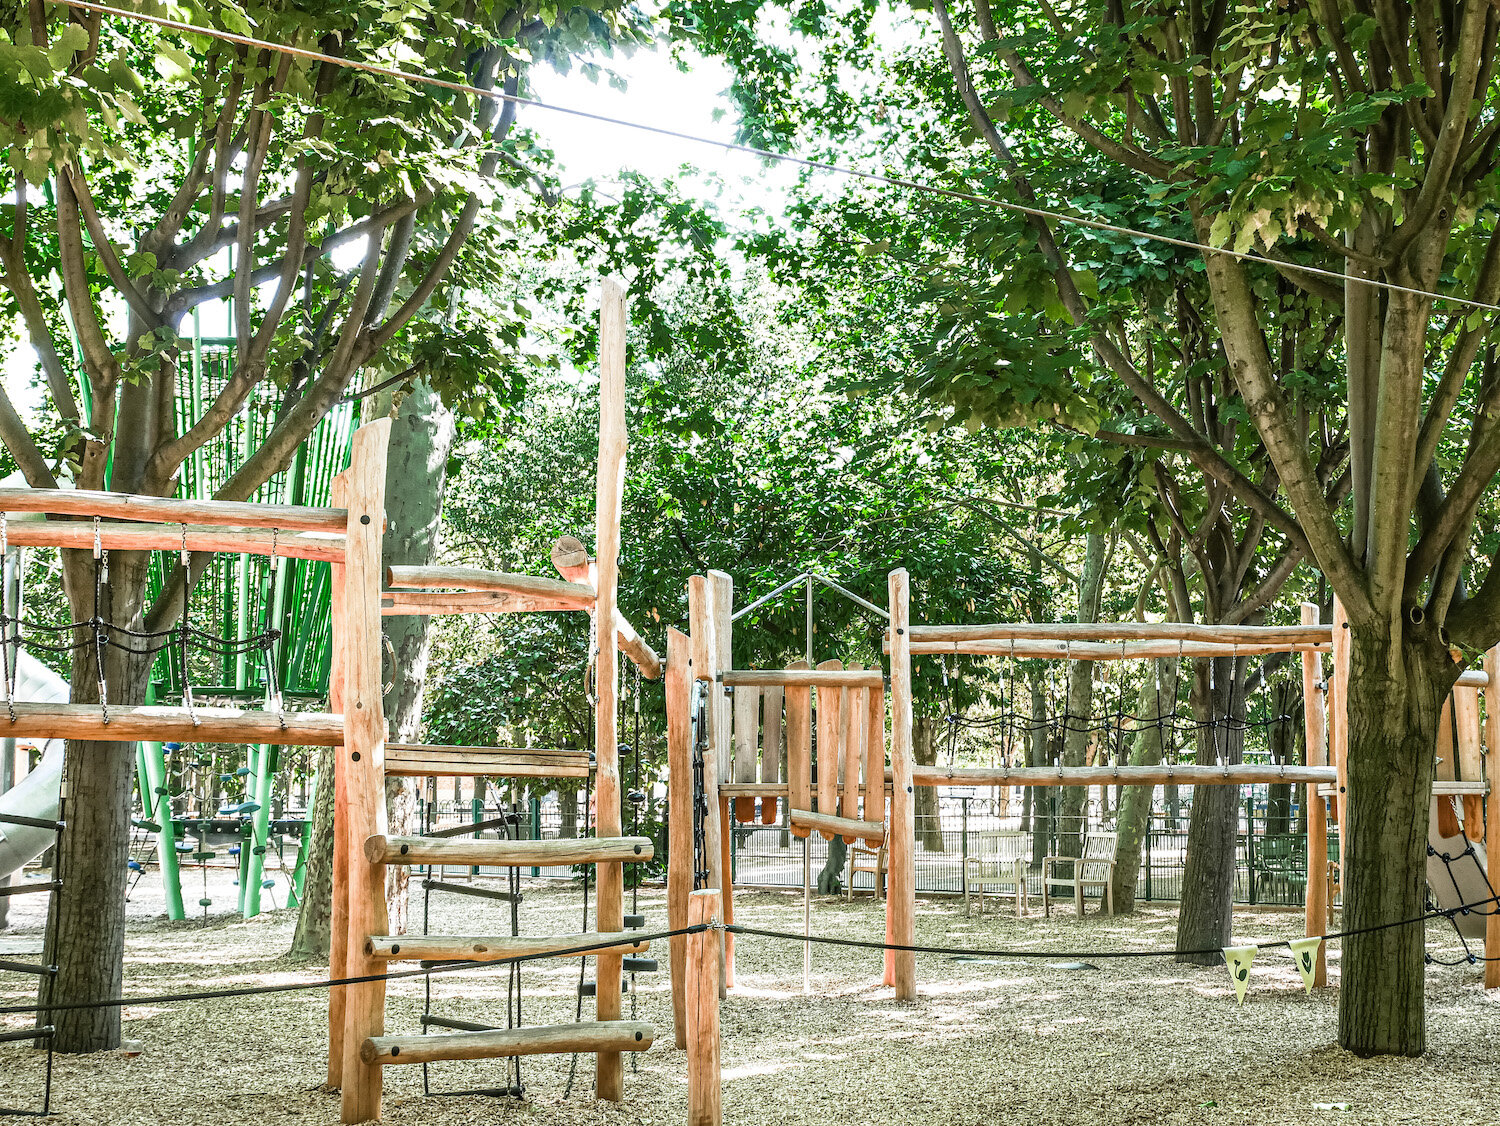 Ludo Jardin - playground for kids in Paris